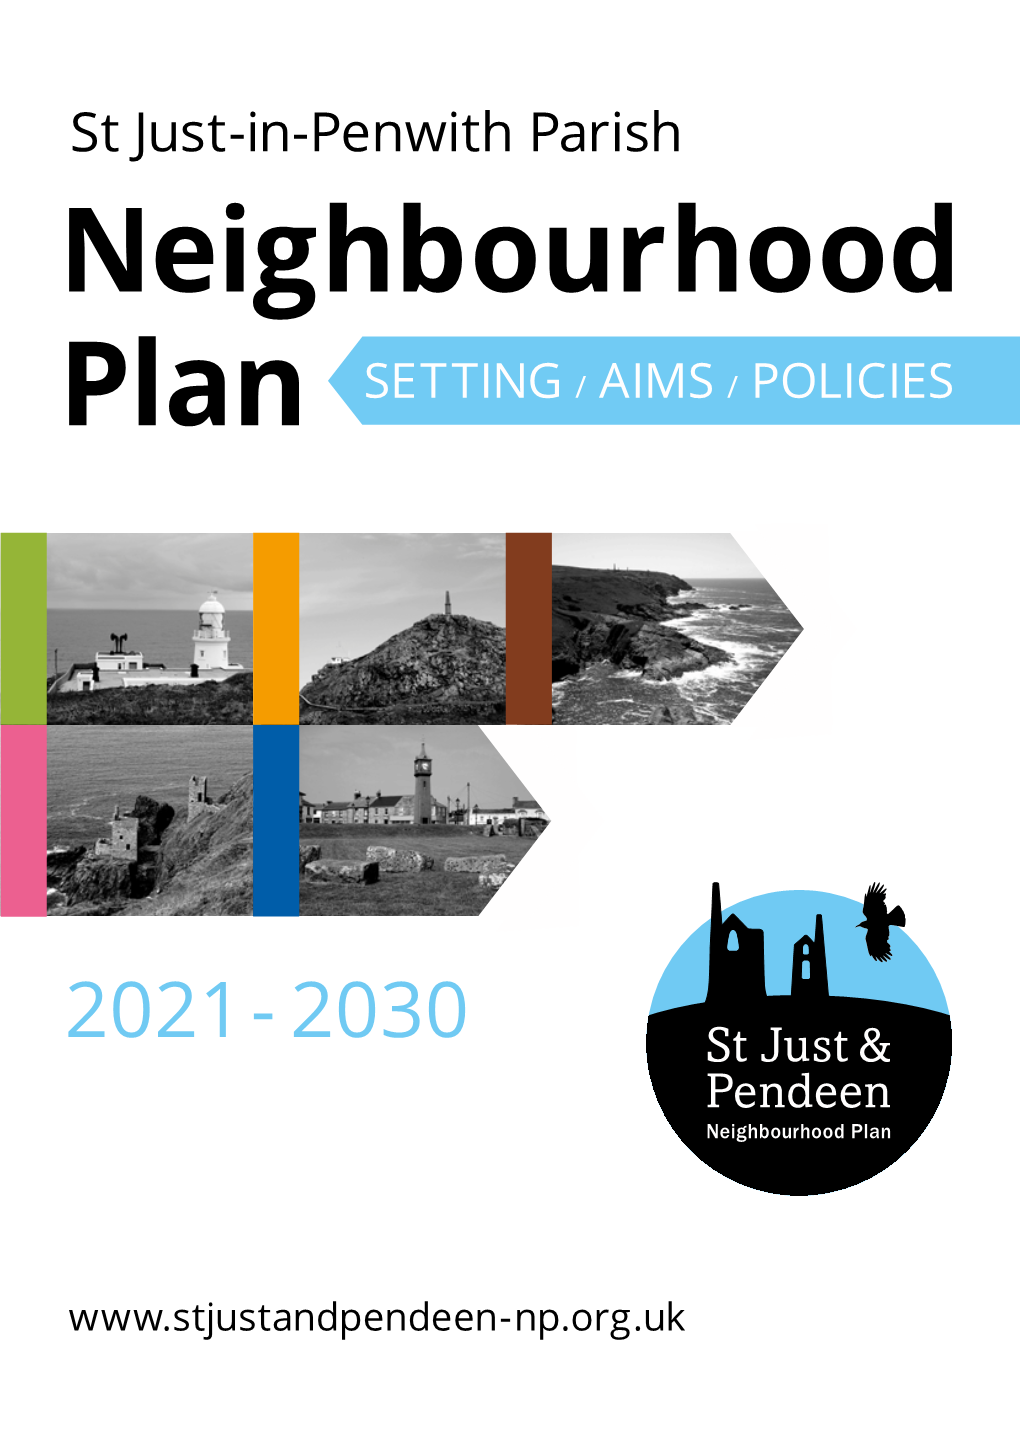 St Just-In-Penwith Parish Neighbourhood Plan